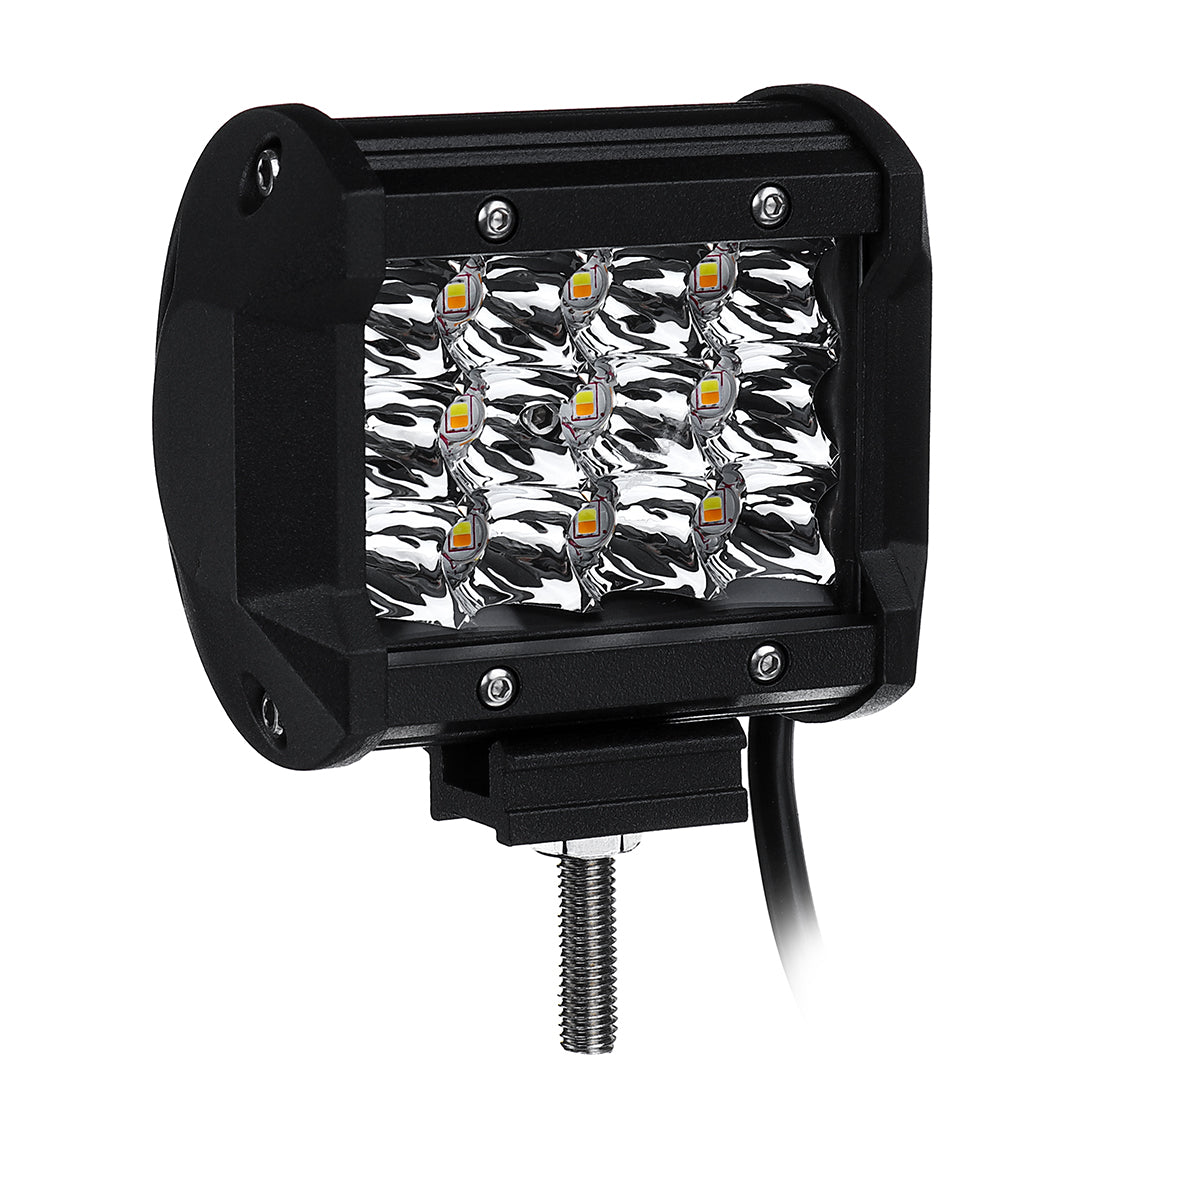 Black 3.5Inch 36W LED Work Light Bar Strobe Flash Lamp White+Amber Dual Color 10-30V for Offroad Truck SUV ATV